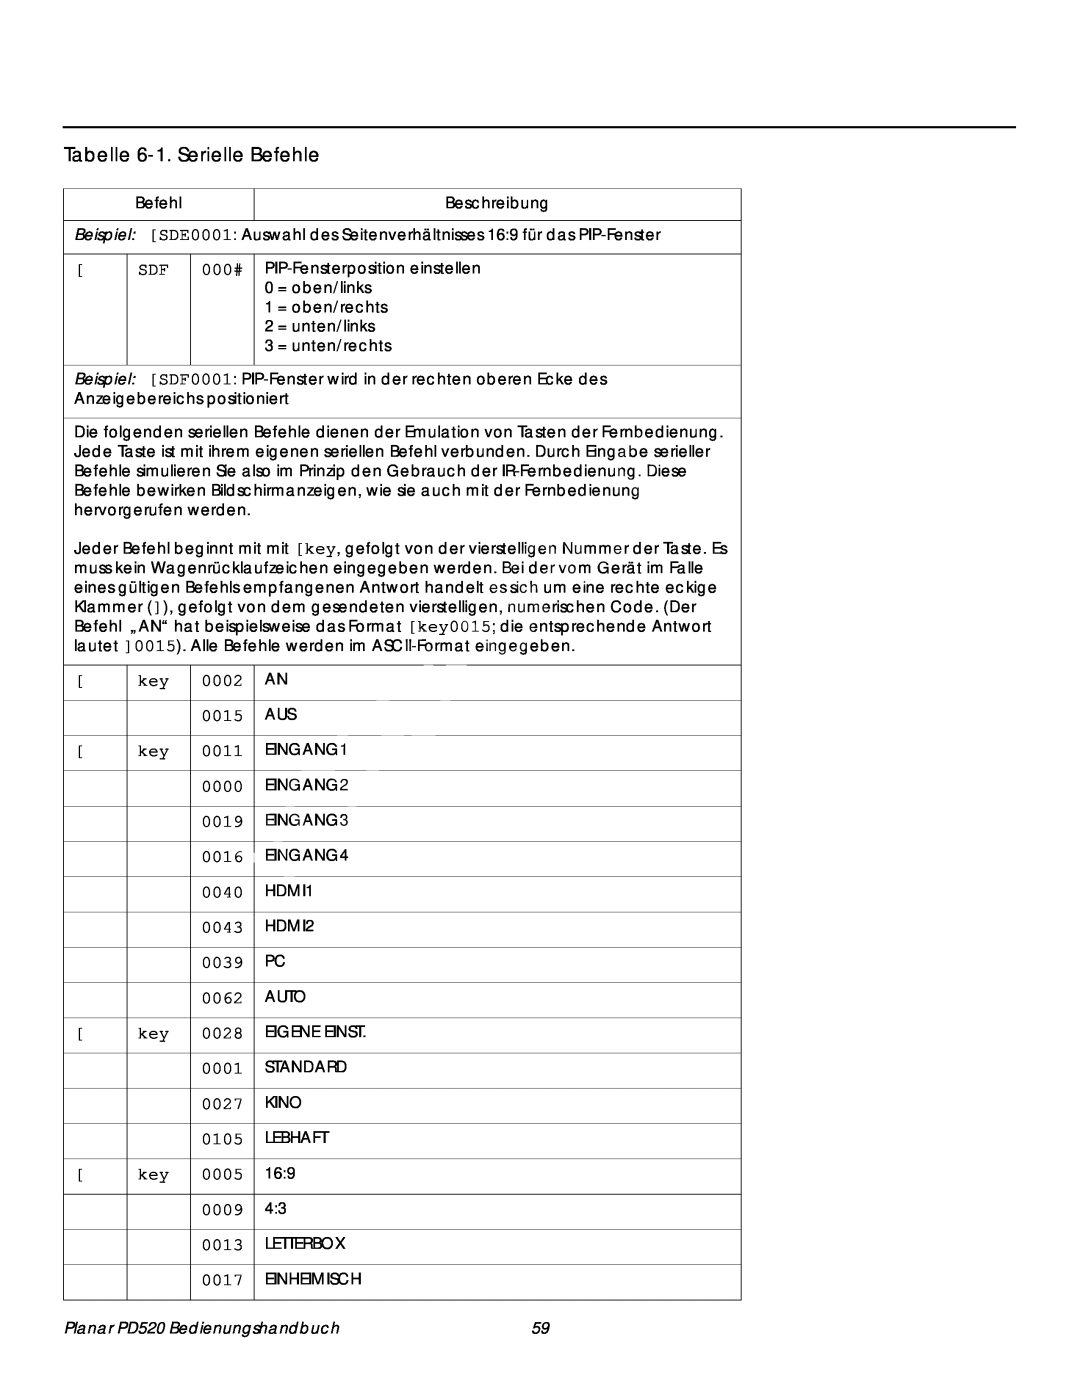 Planar PD520 manual Tabelle 6-1.Serielle Befehle, 000# 